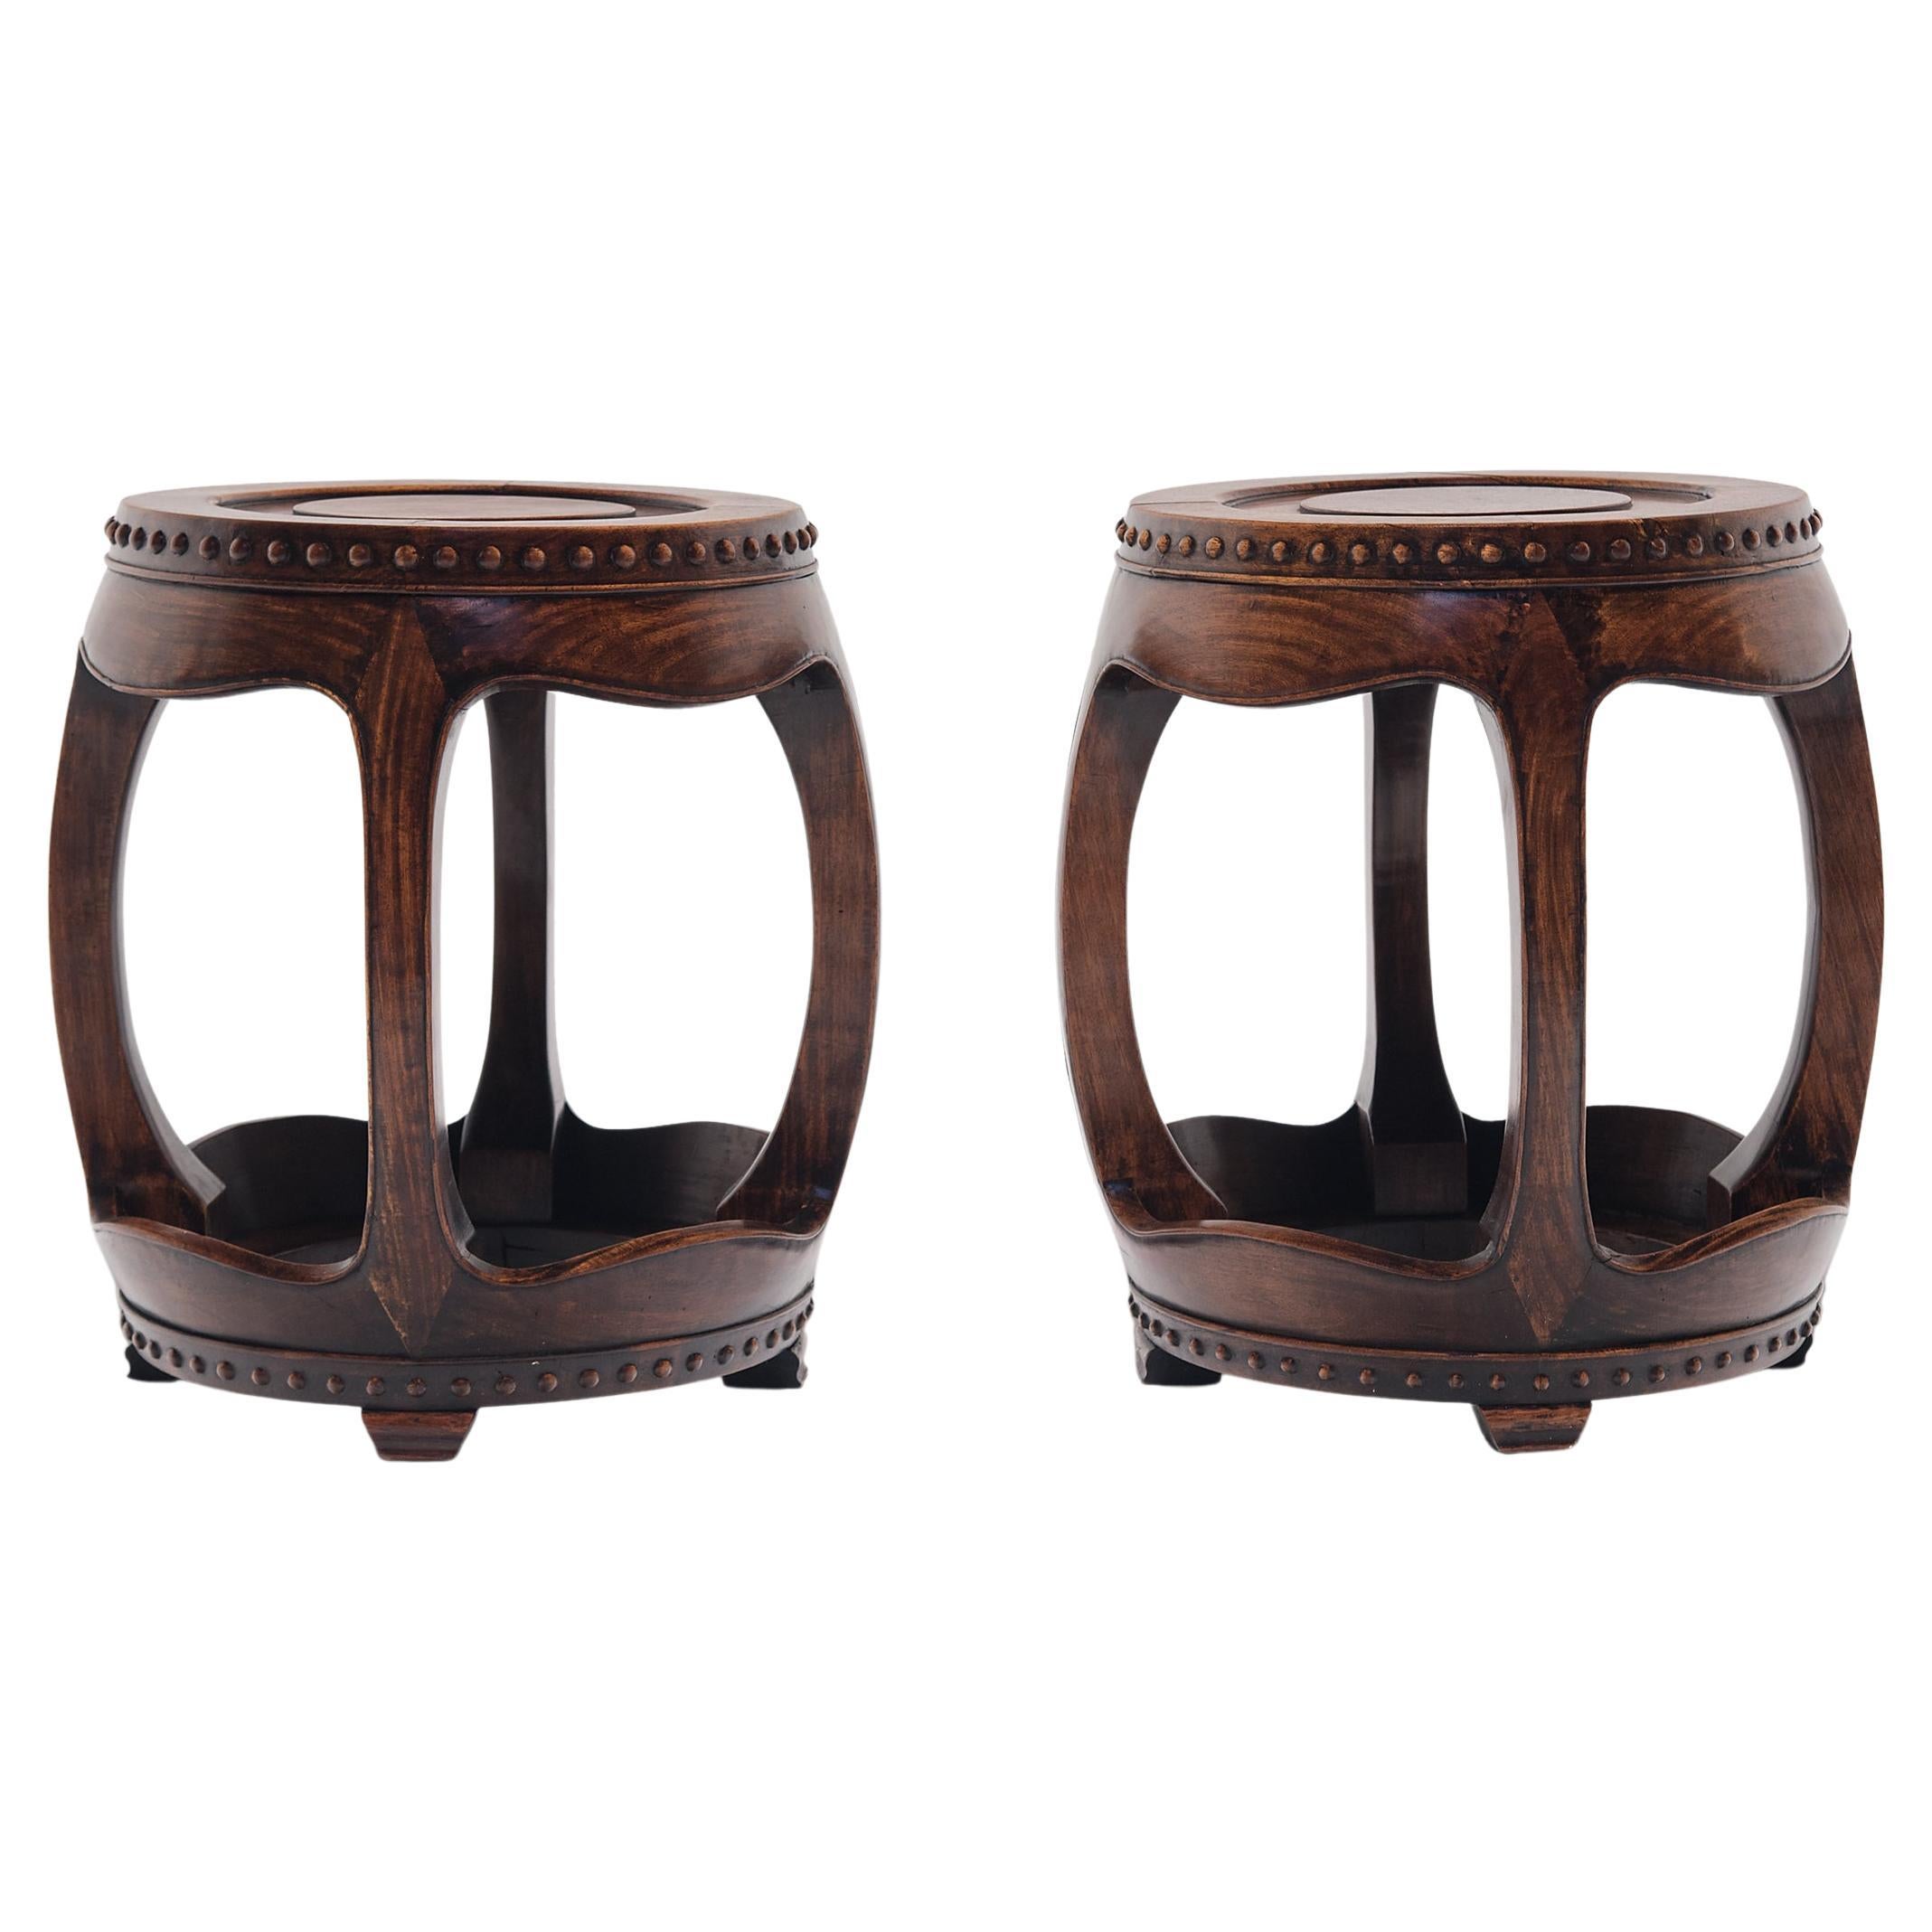 Pair of Elegant Chinese Hardwood Drum Stools, C. 1850